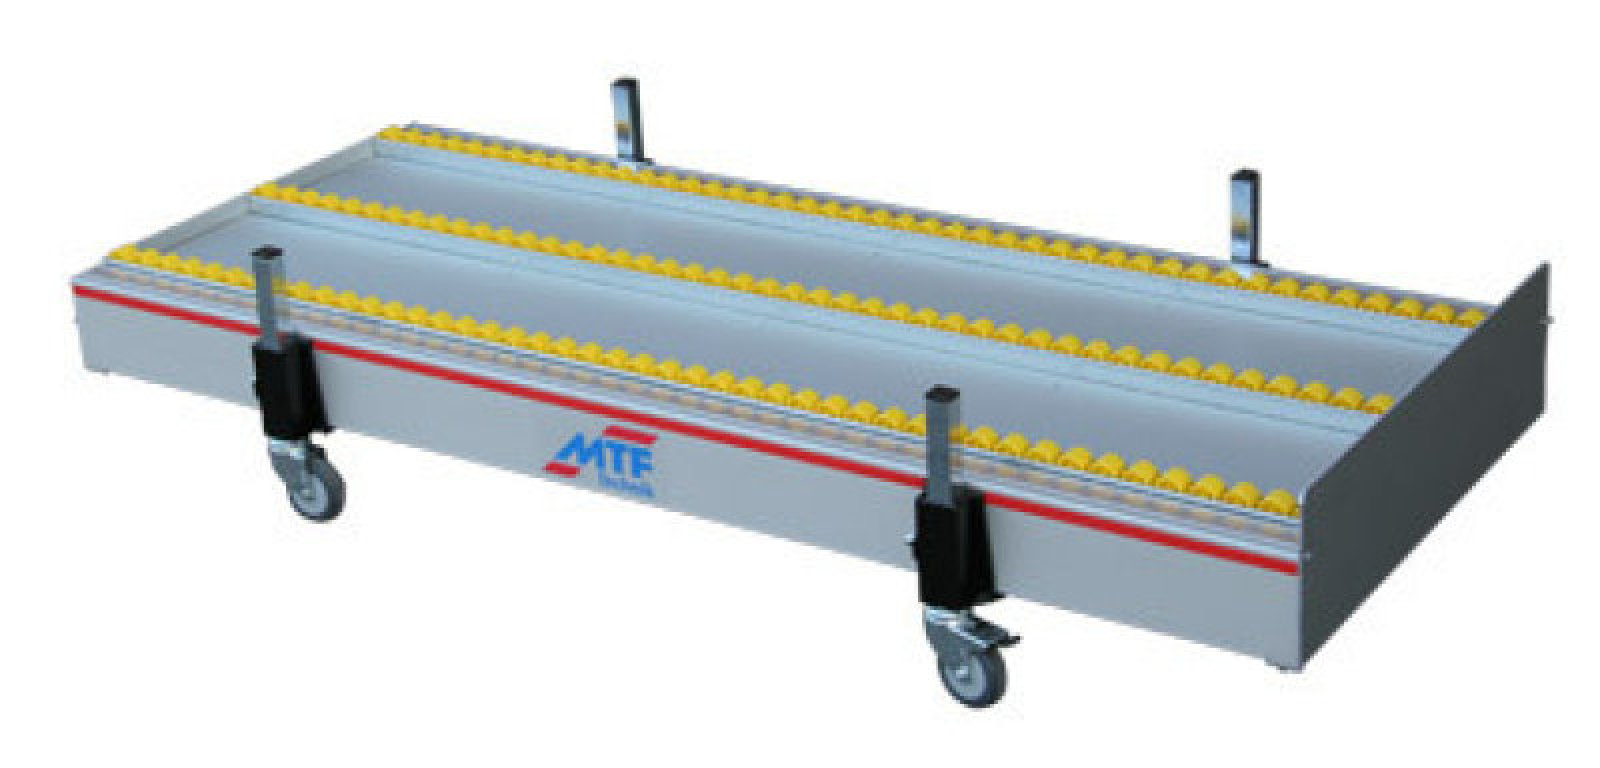 MTF Technik - Multi-Roll Reel conveyor, Serial No. 33705